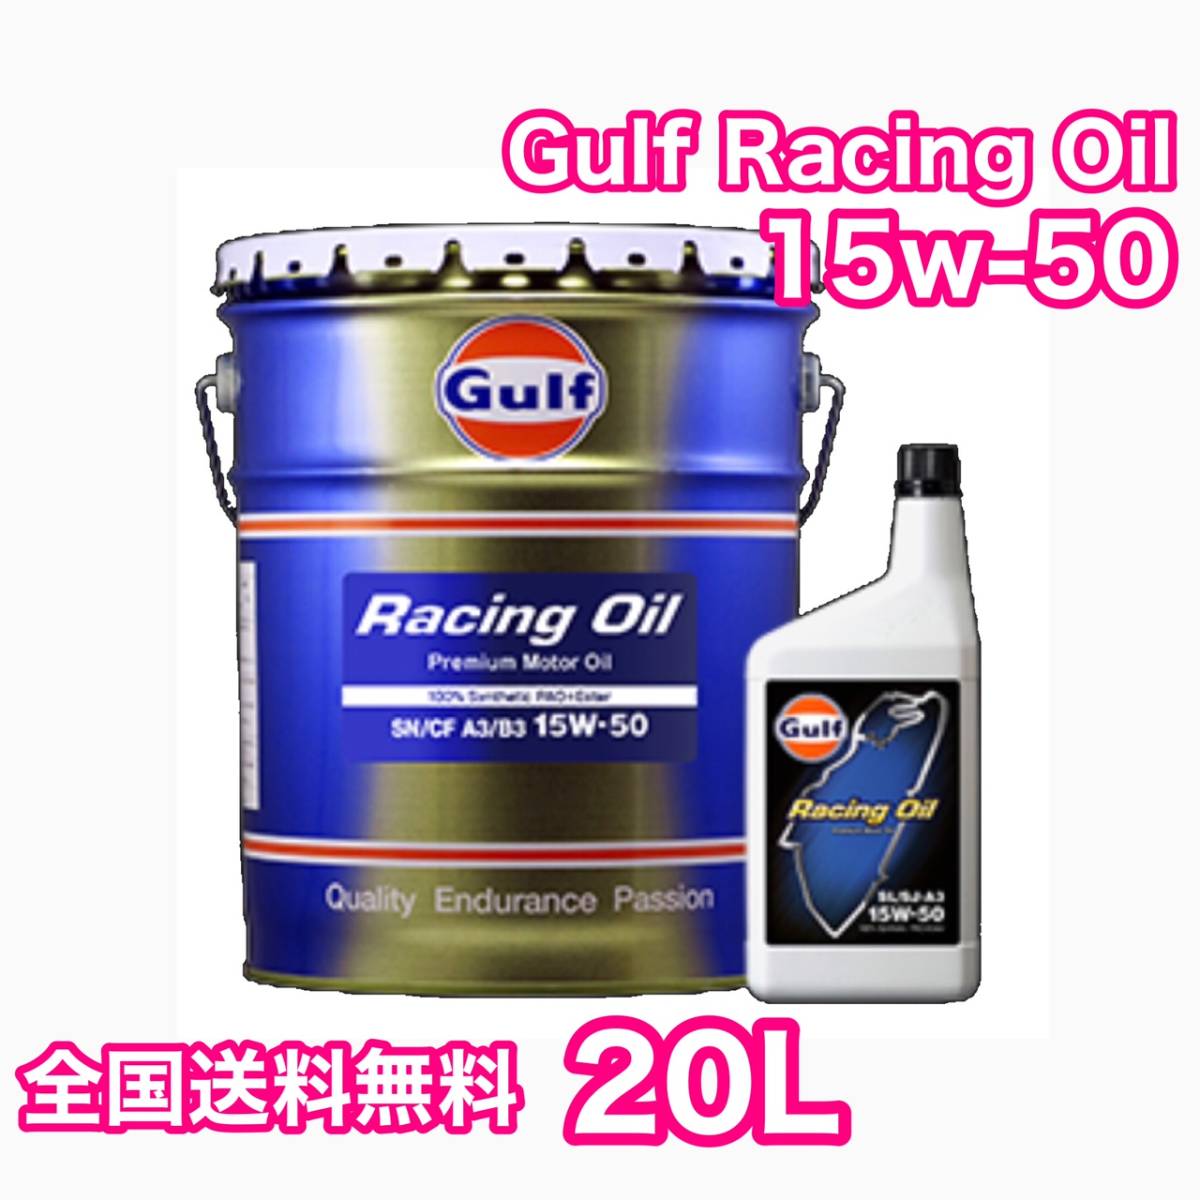 Gulf Racing Oil 15w-50 20L ガルフ レーシング オイル